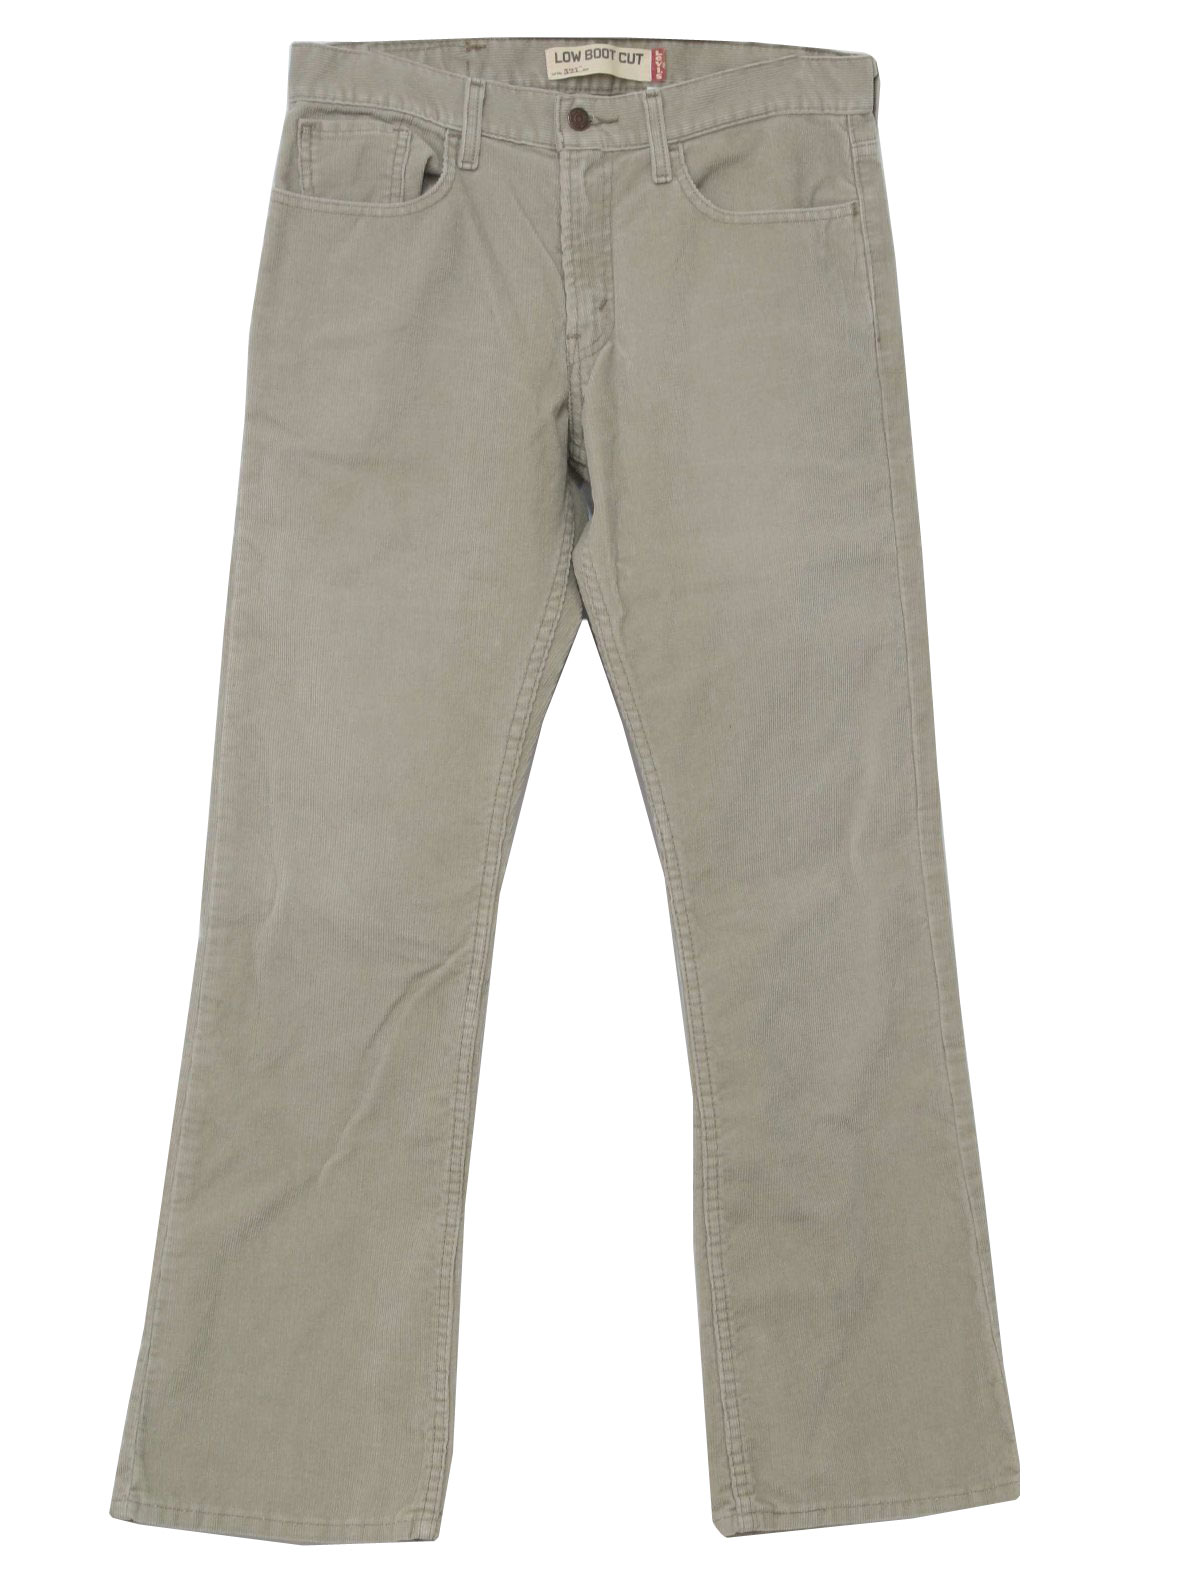 Vintage 90s Flared Pants / Flares: 90s -Levis- Mens light gray cotton ...